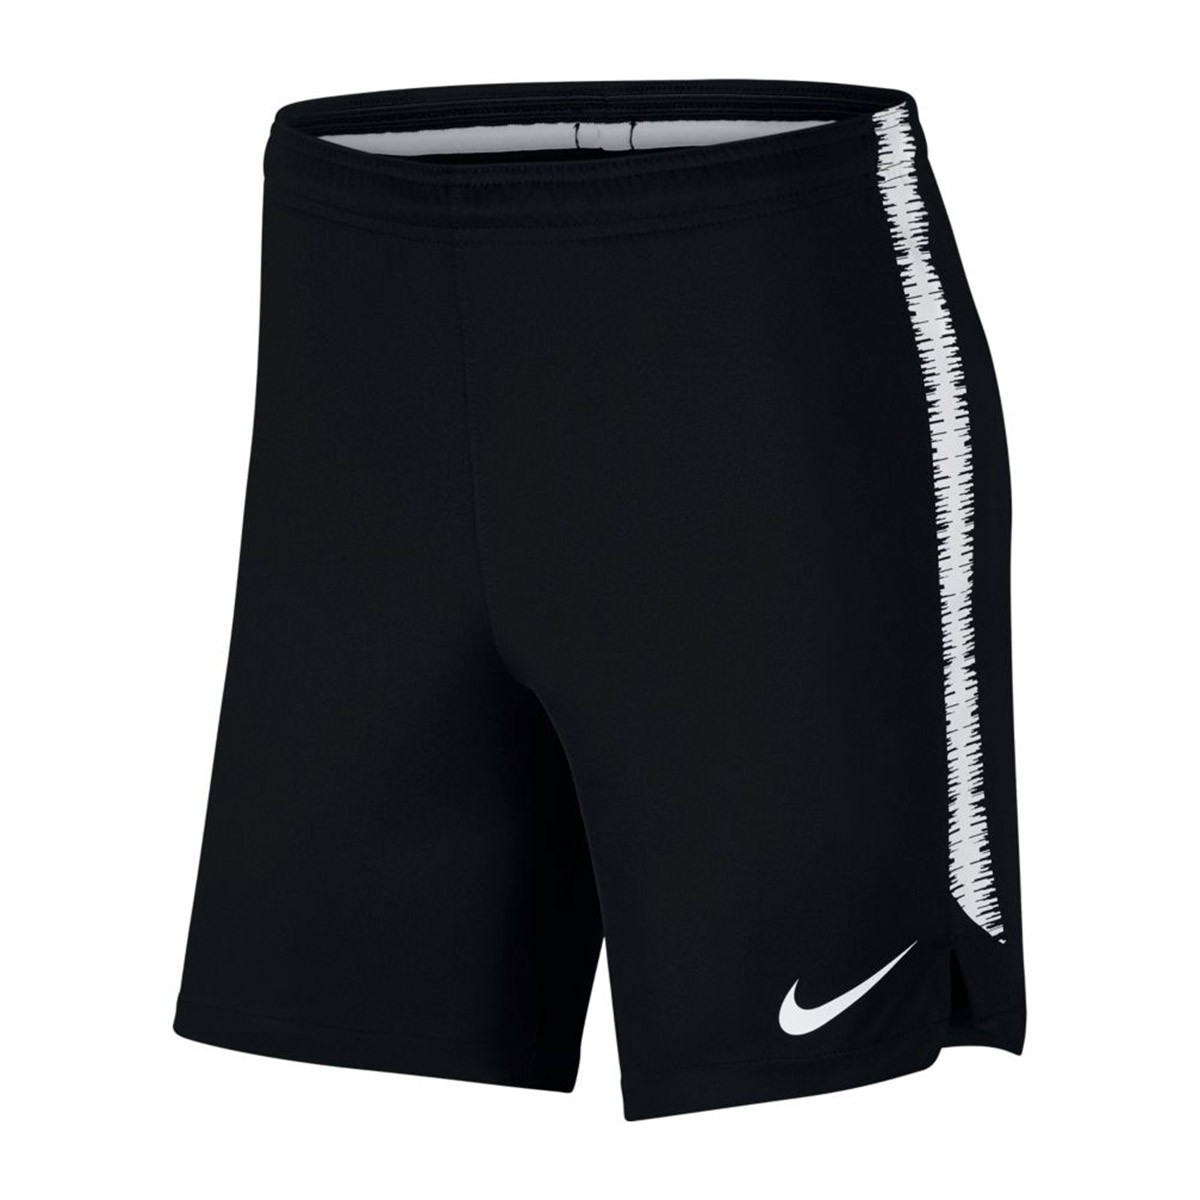 Shorts Nike Dry Squad Black-White - Football store Fútbol Emotion